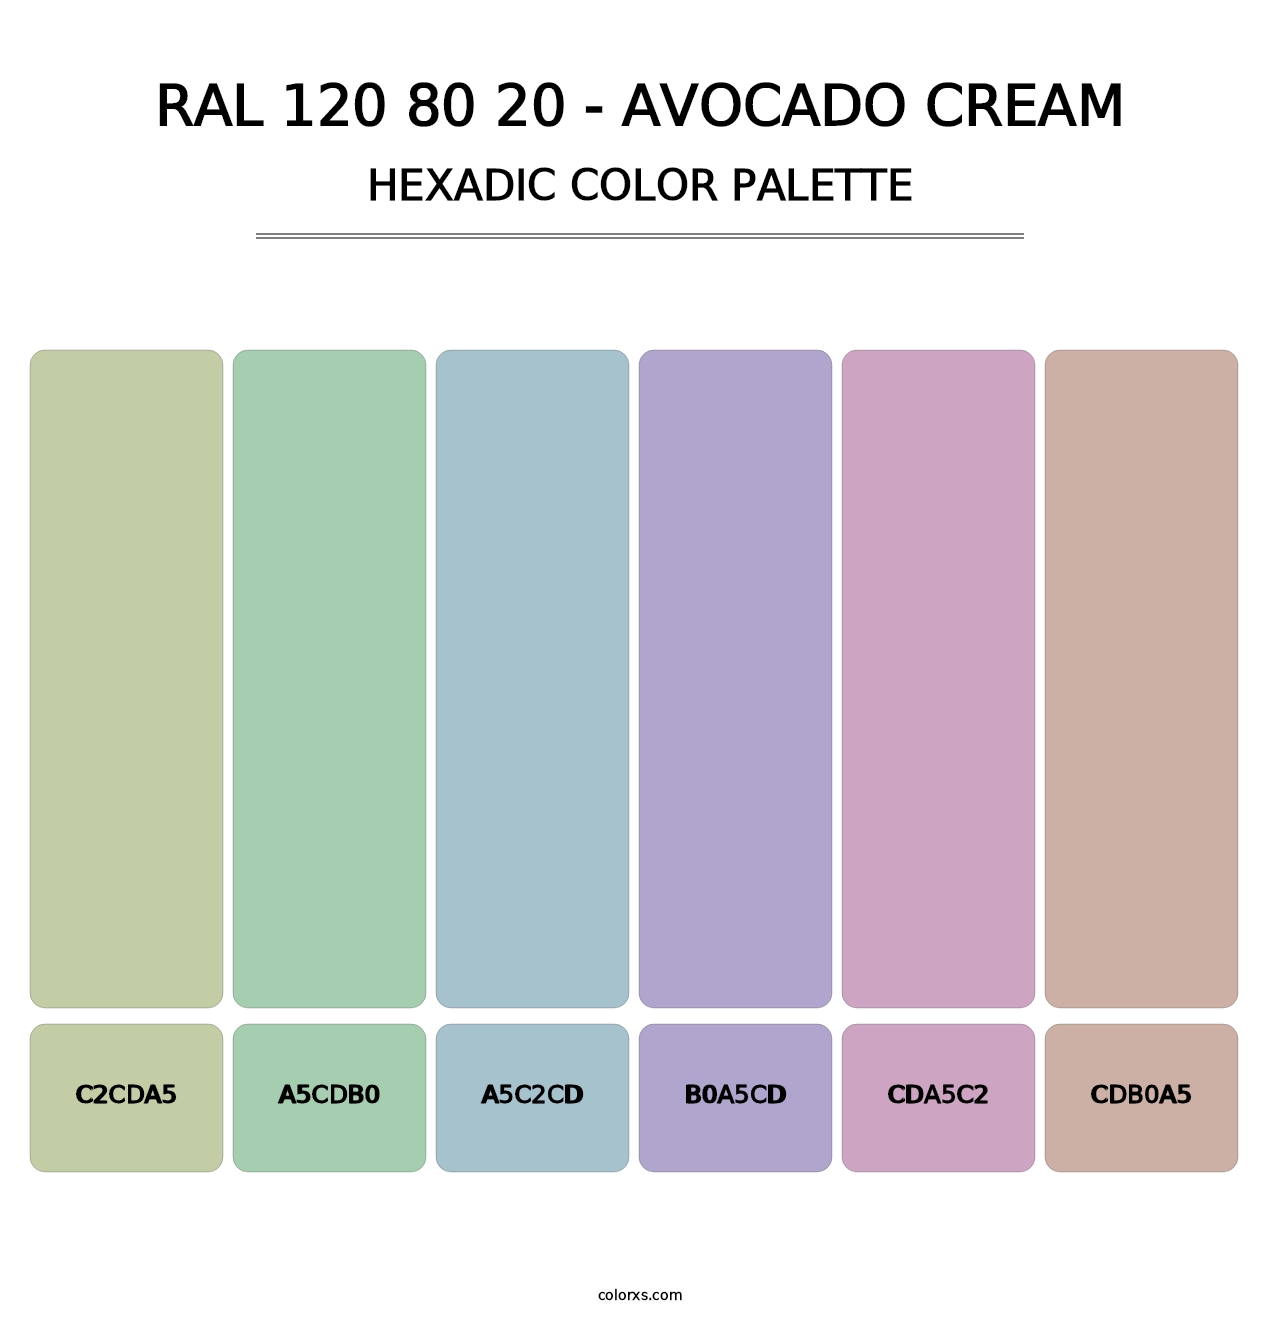 RAL 120 80 20 - Avocado Cream - Hexadic Color Palette